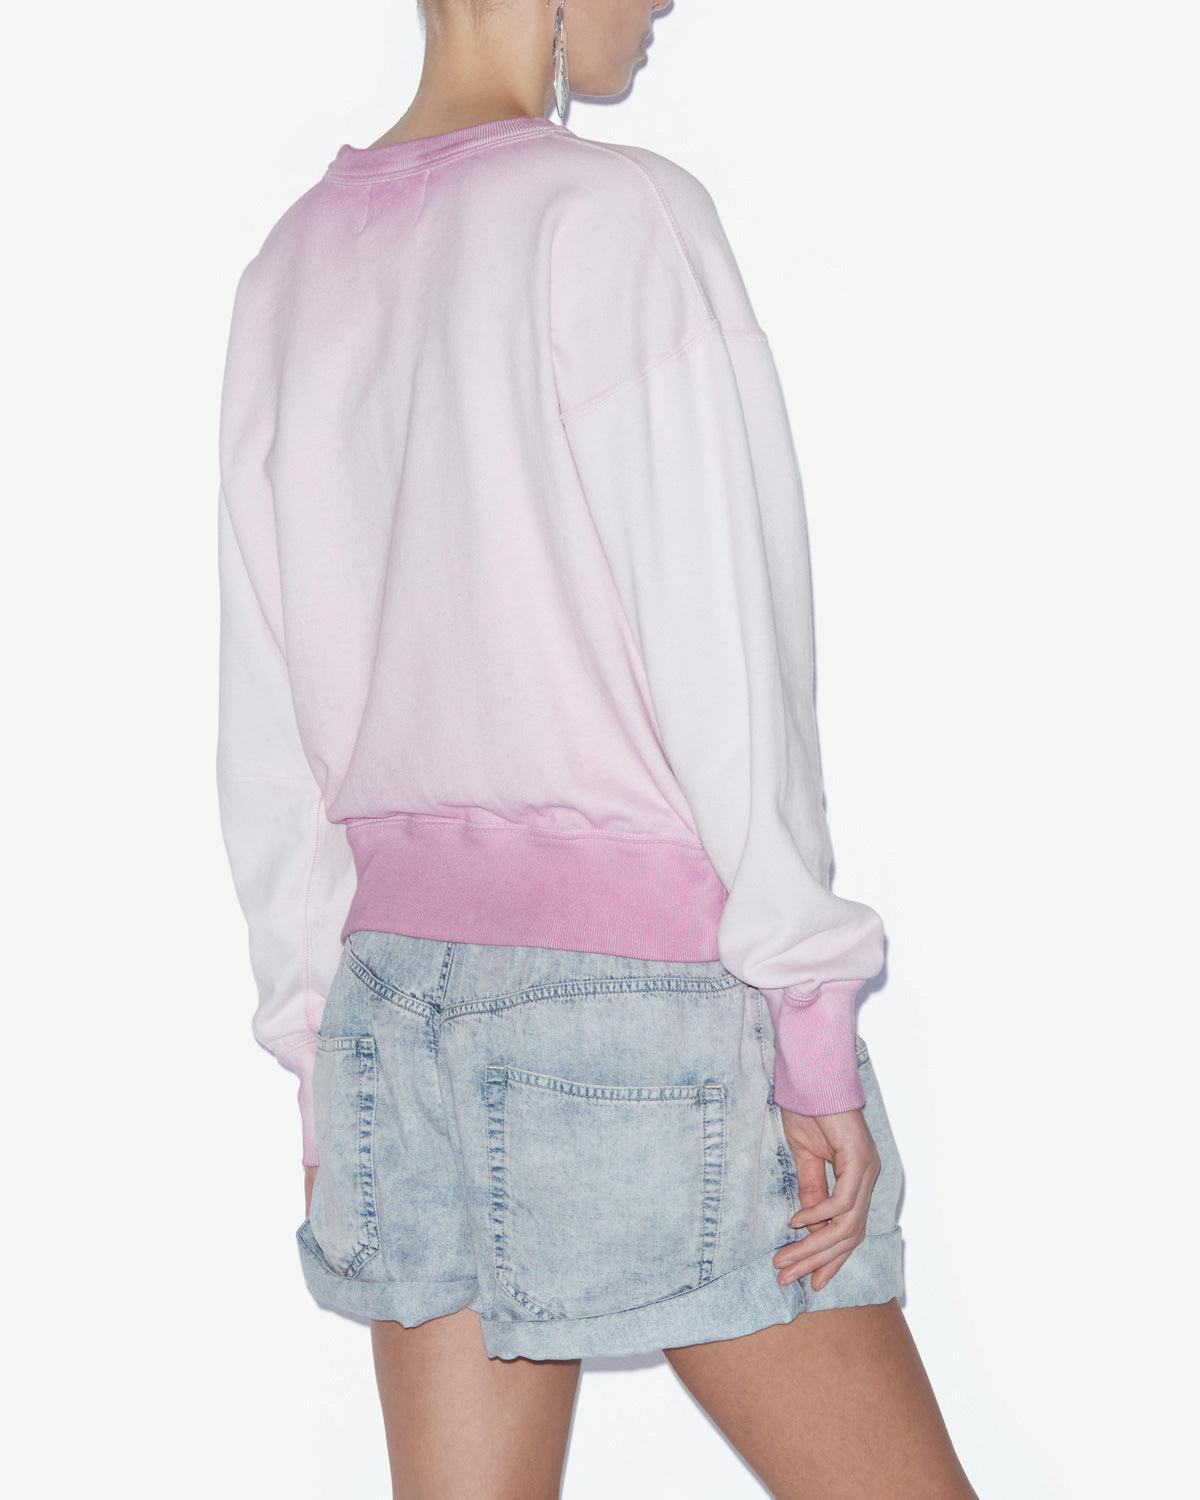 Mobyli スウェットシャツ Woman Lilac 3